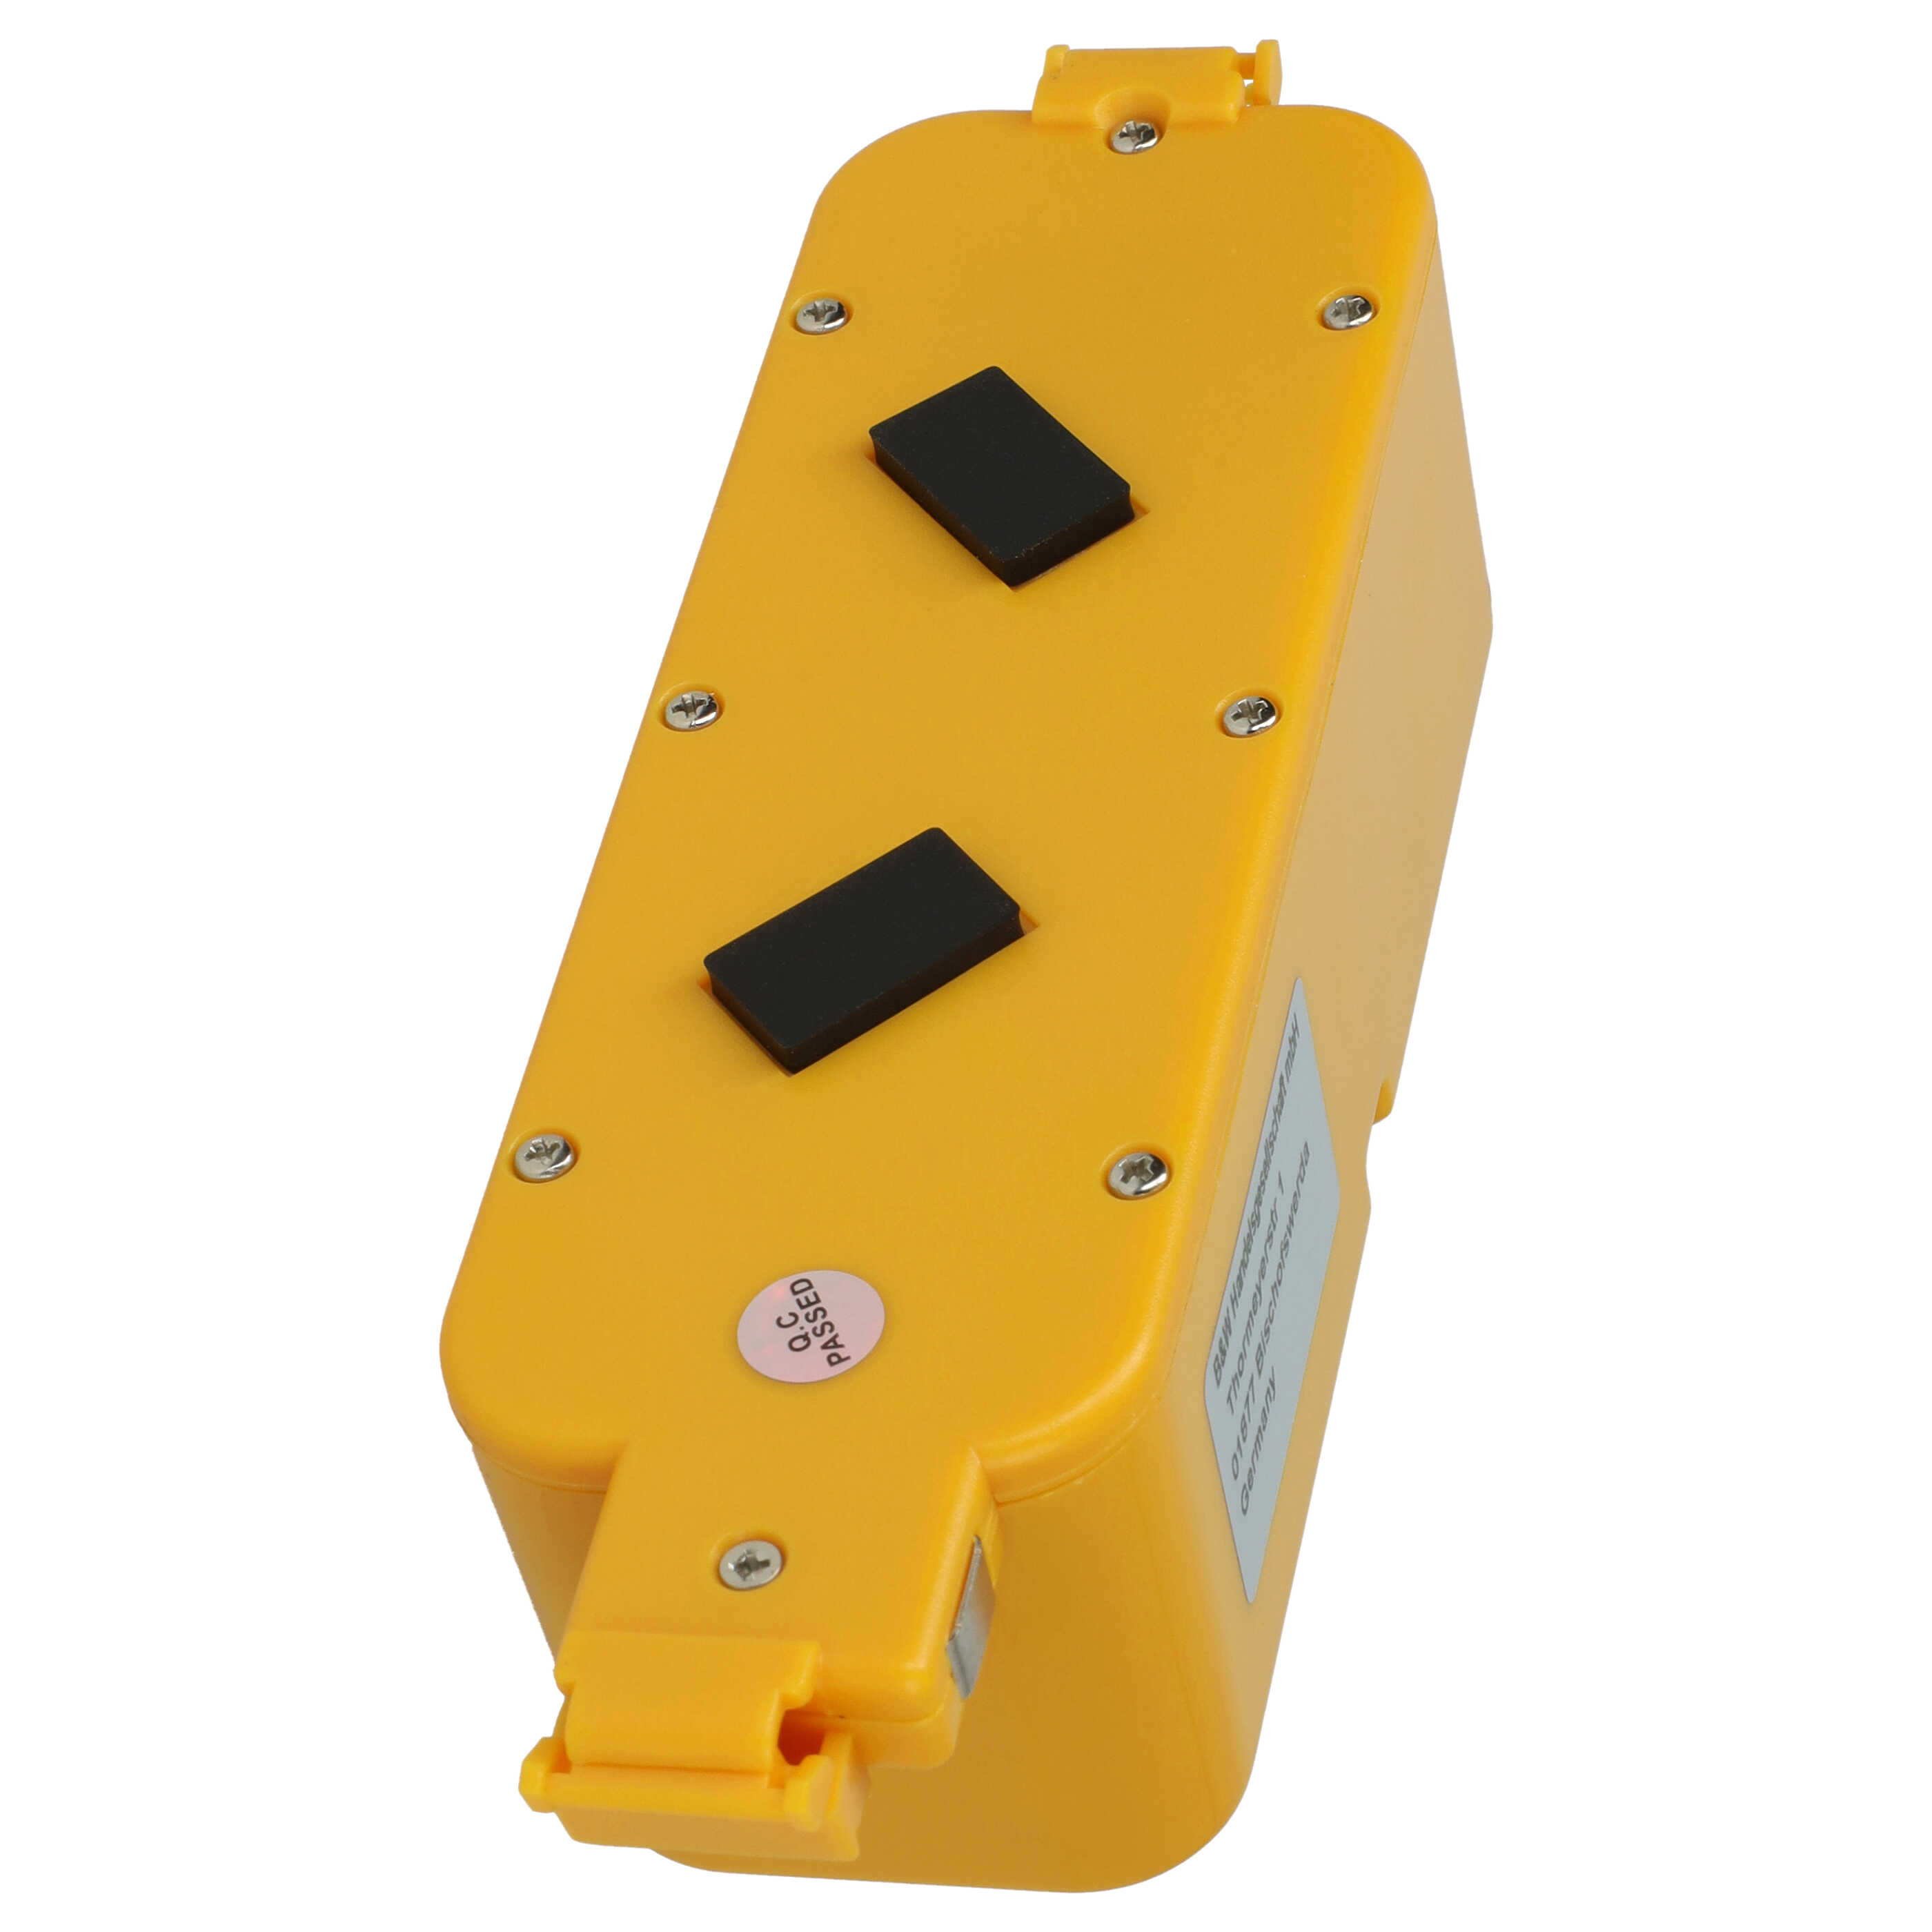 Akumulator do robota zamiennik APS 4905, NC-3493-919, 11700, 17373 - 3500 mAh 14,4 V NiMH, żółty